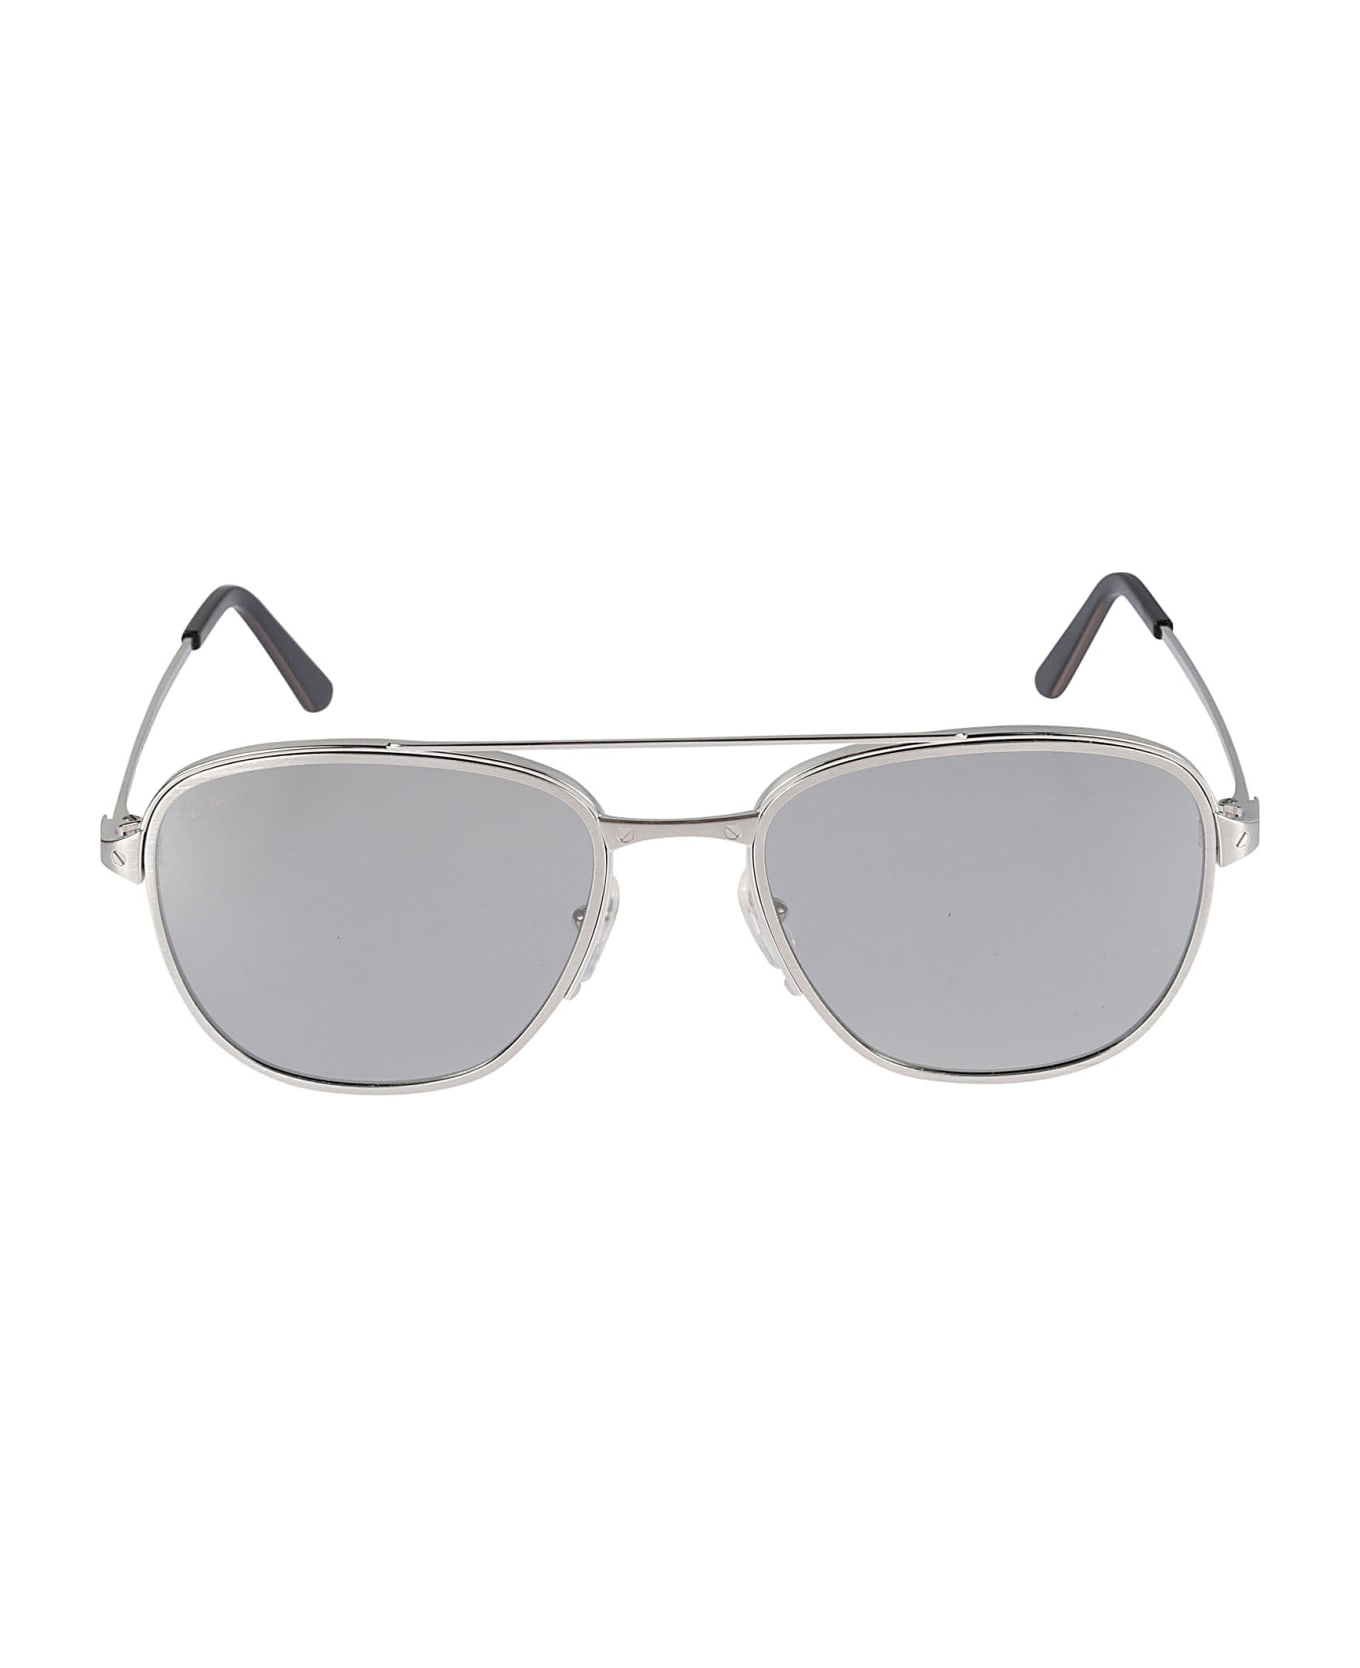 Cartier Eyewear Genuine Sunglasses - 006 silver silver silver